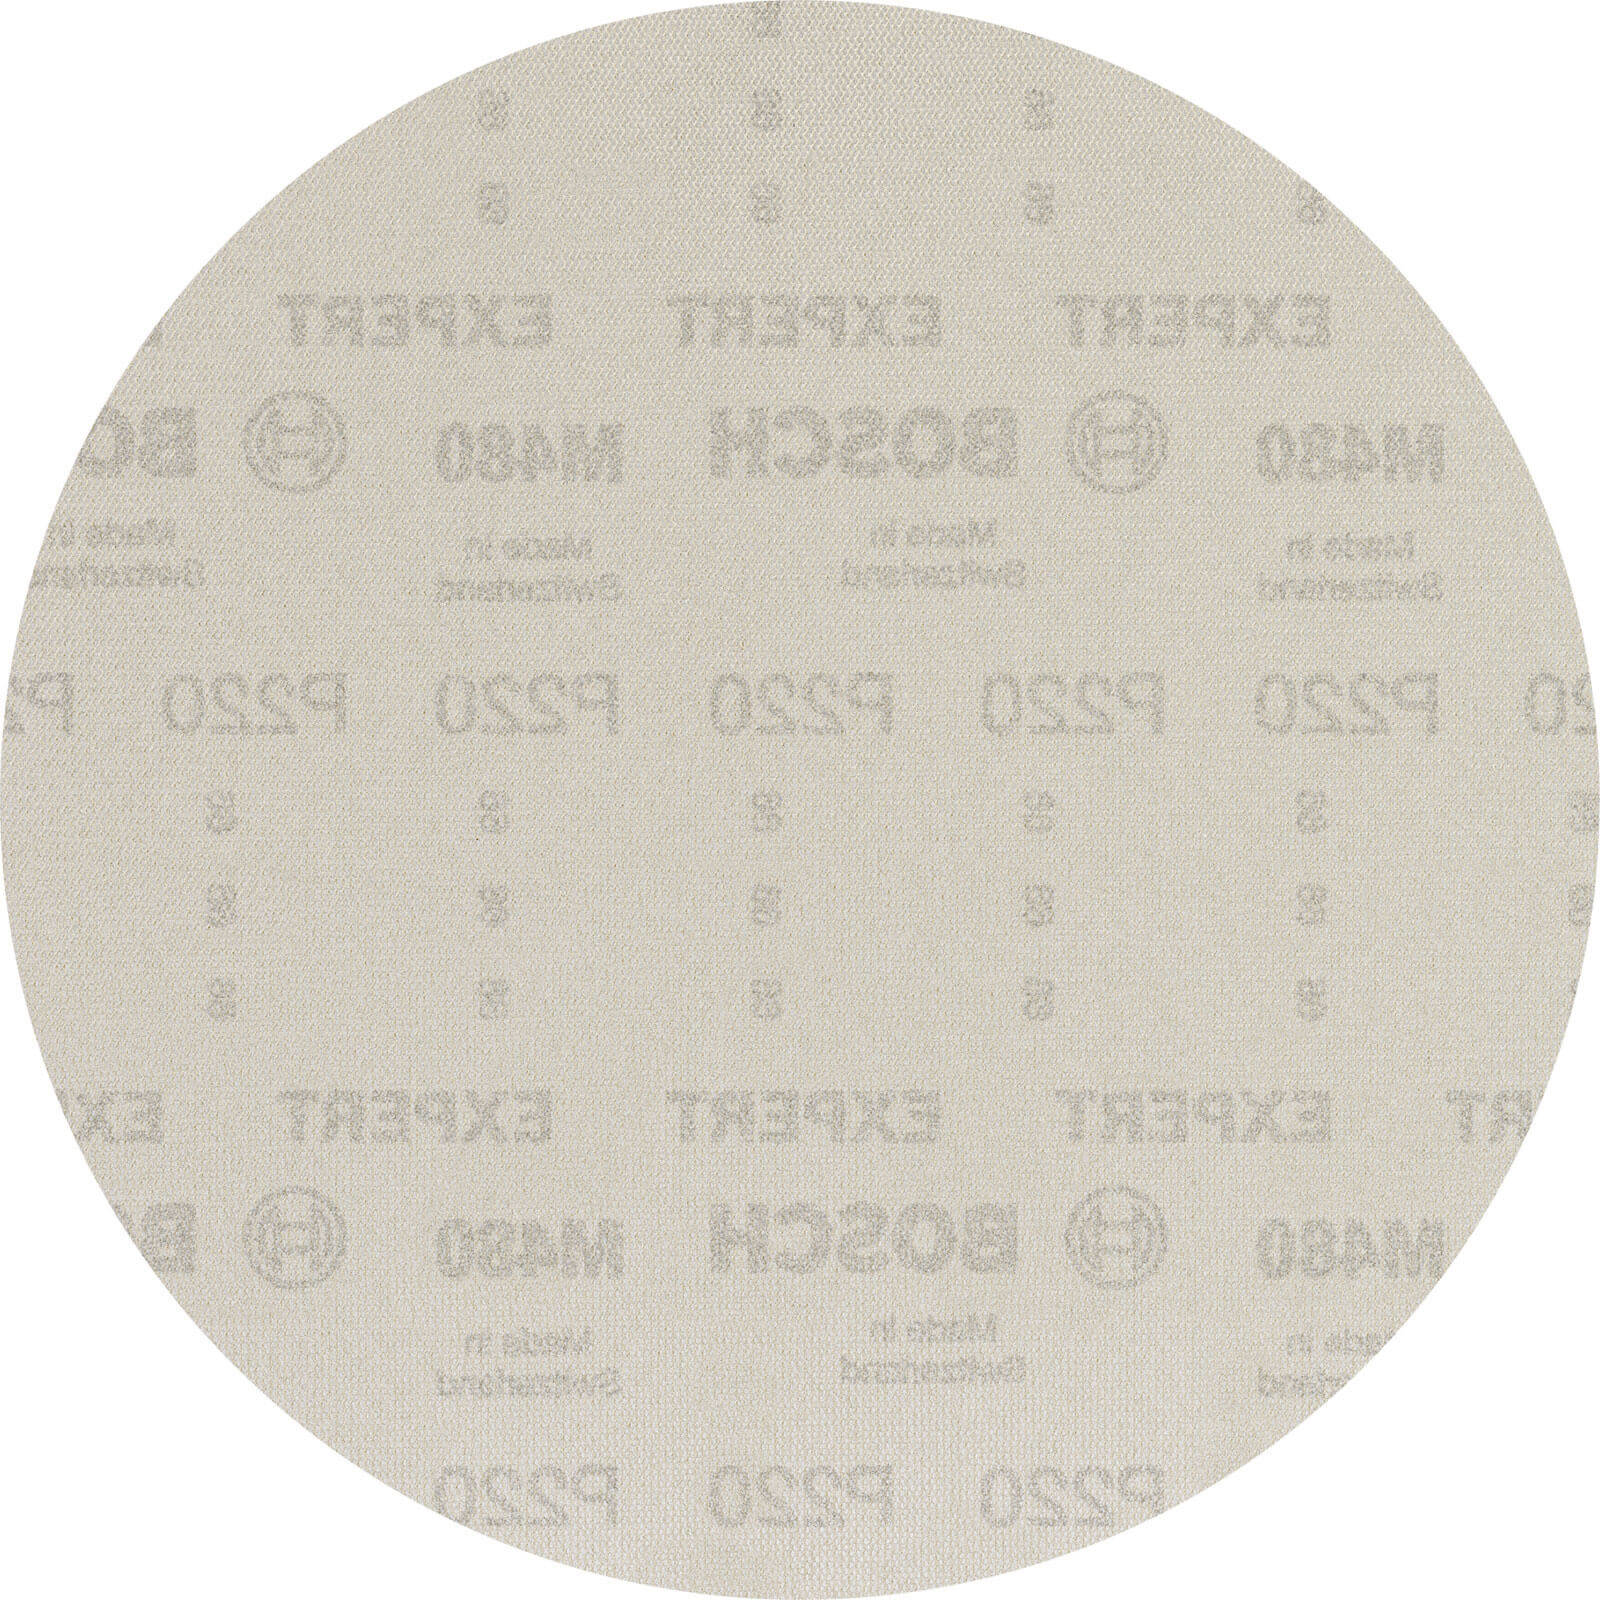 Photo of Bosch Expert M480 225mm Net Abrasive Sanding Disc 225mm 220g Pack Of 25